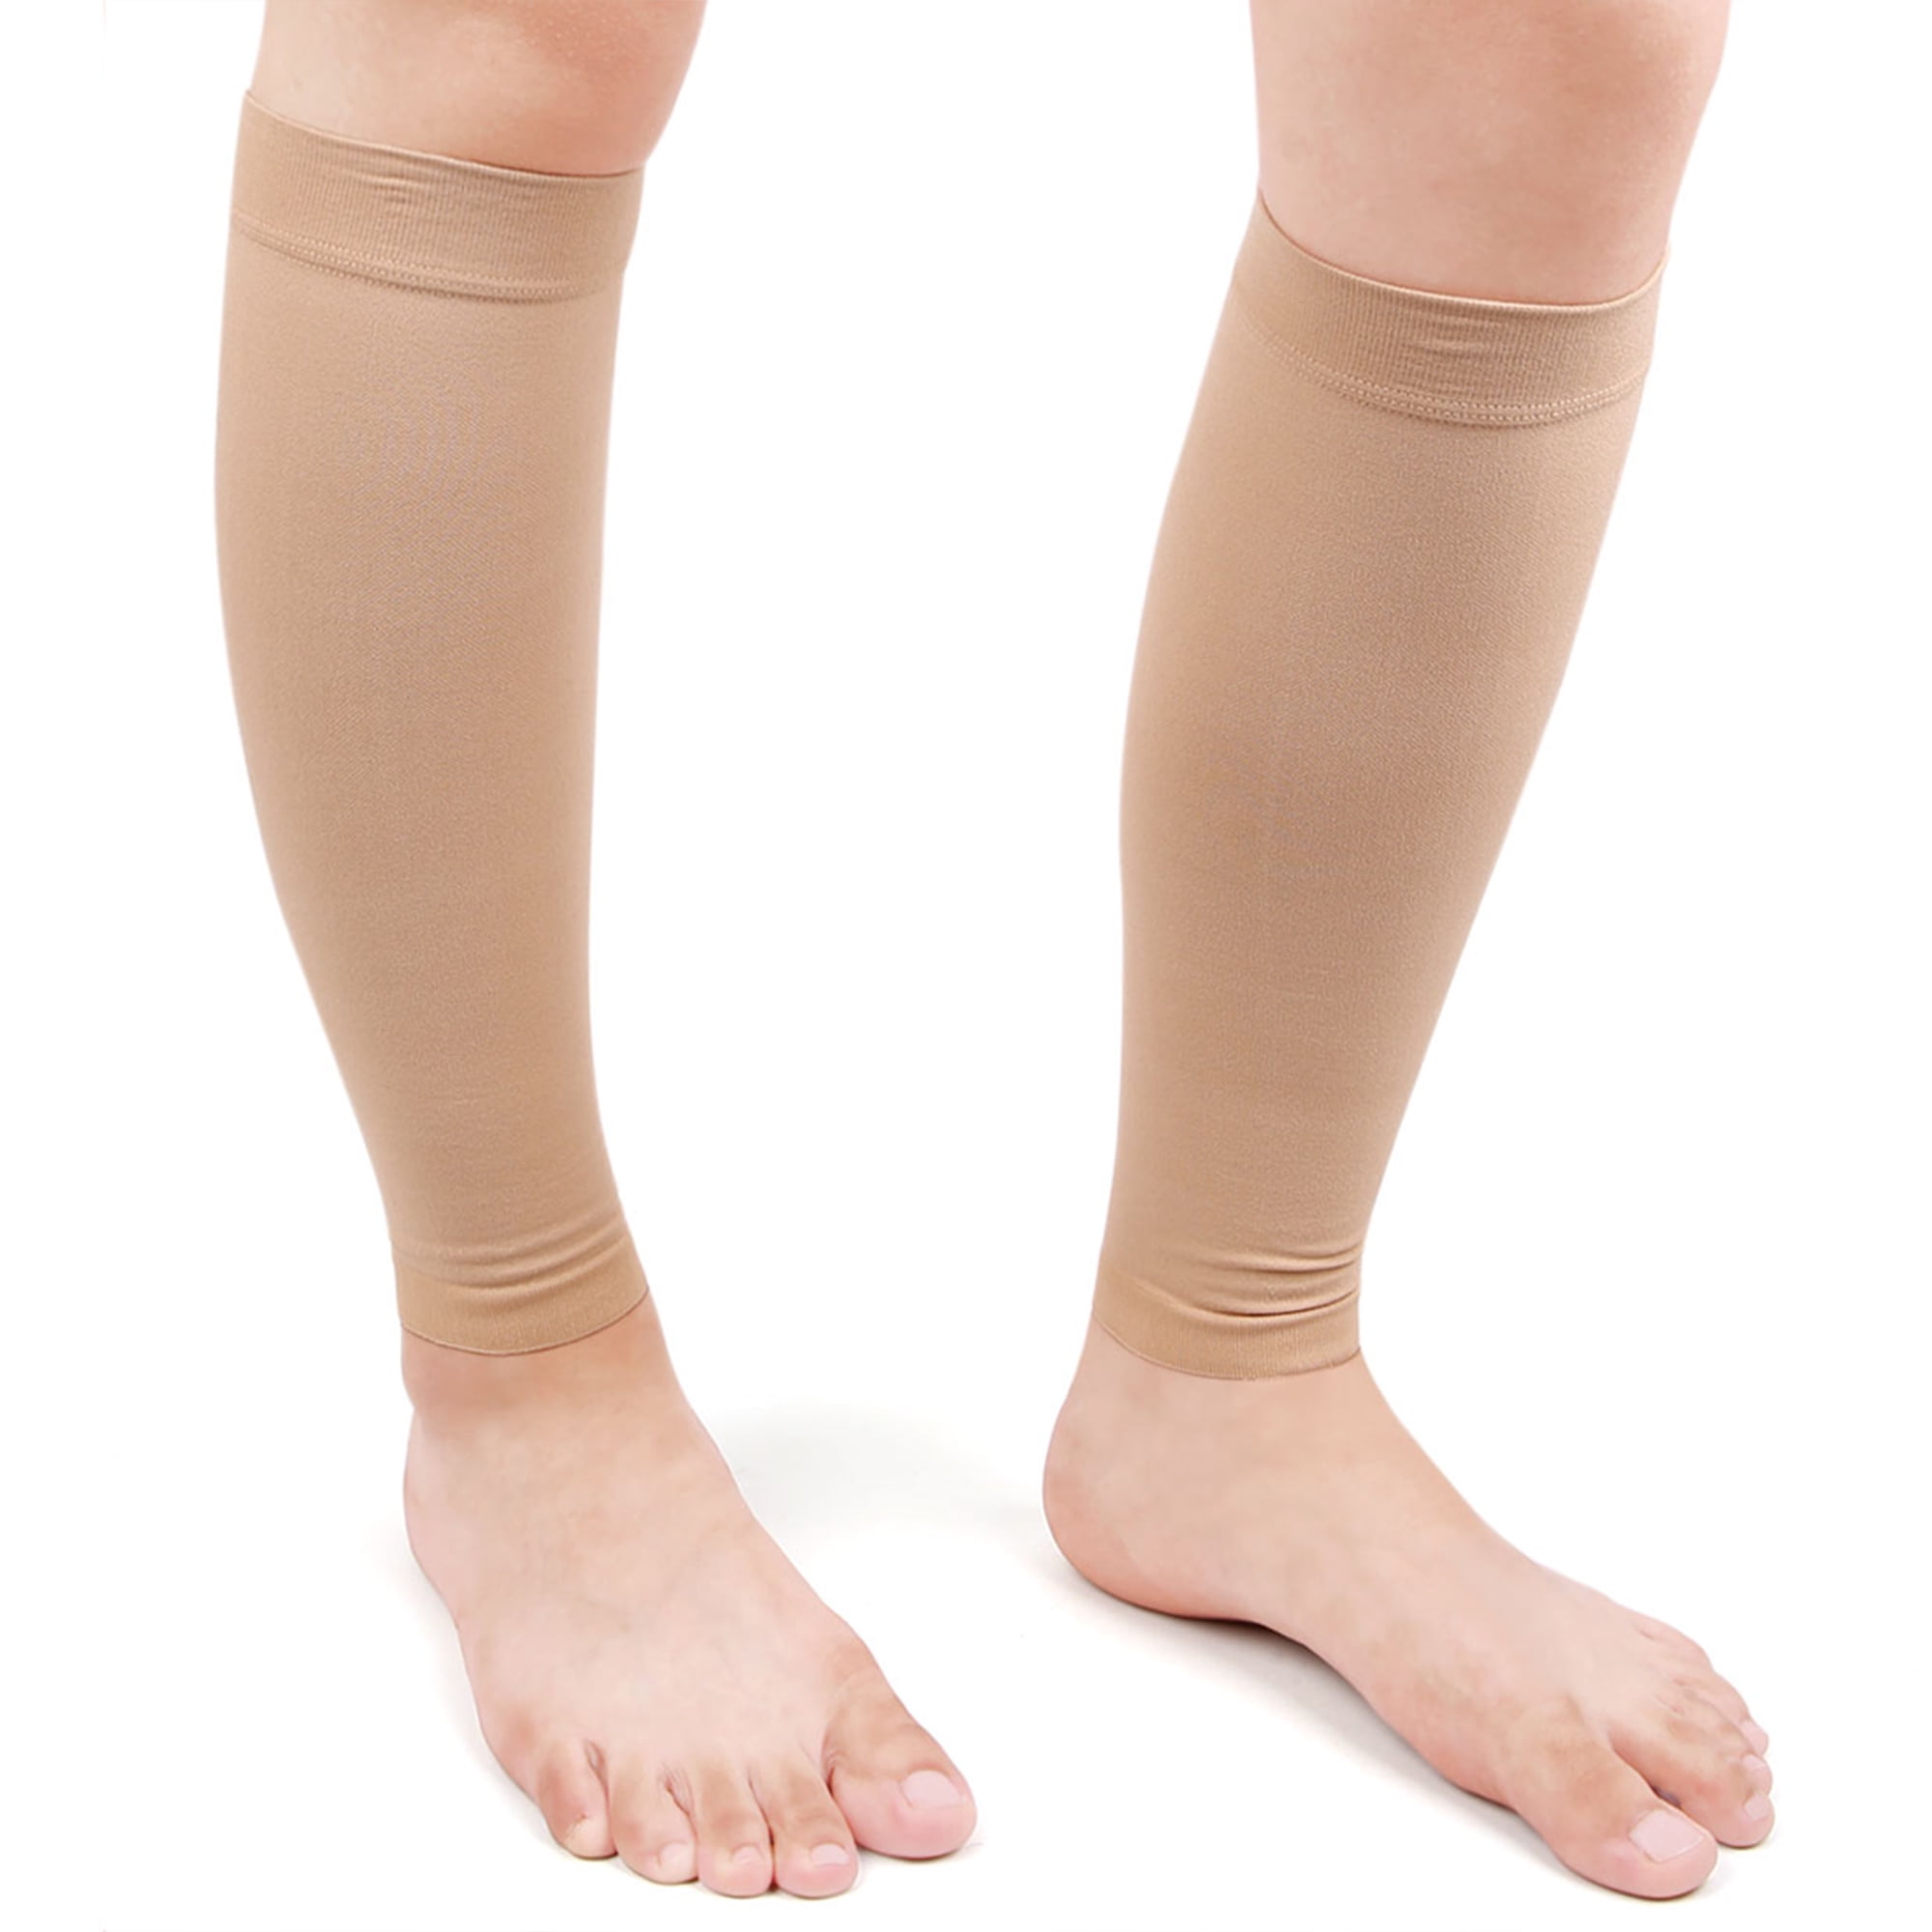 Zipper Compression Socks - Open Toe Knee High Graduated Pressure Support  Hose for Improved Leg Circulation - Unisex - White Large Size - 5 Star  Super Deals 